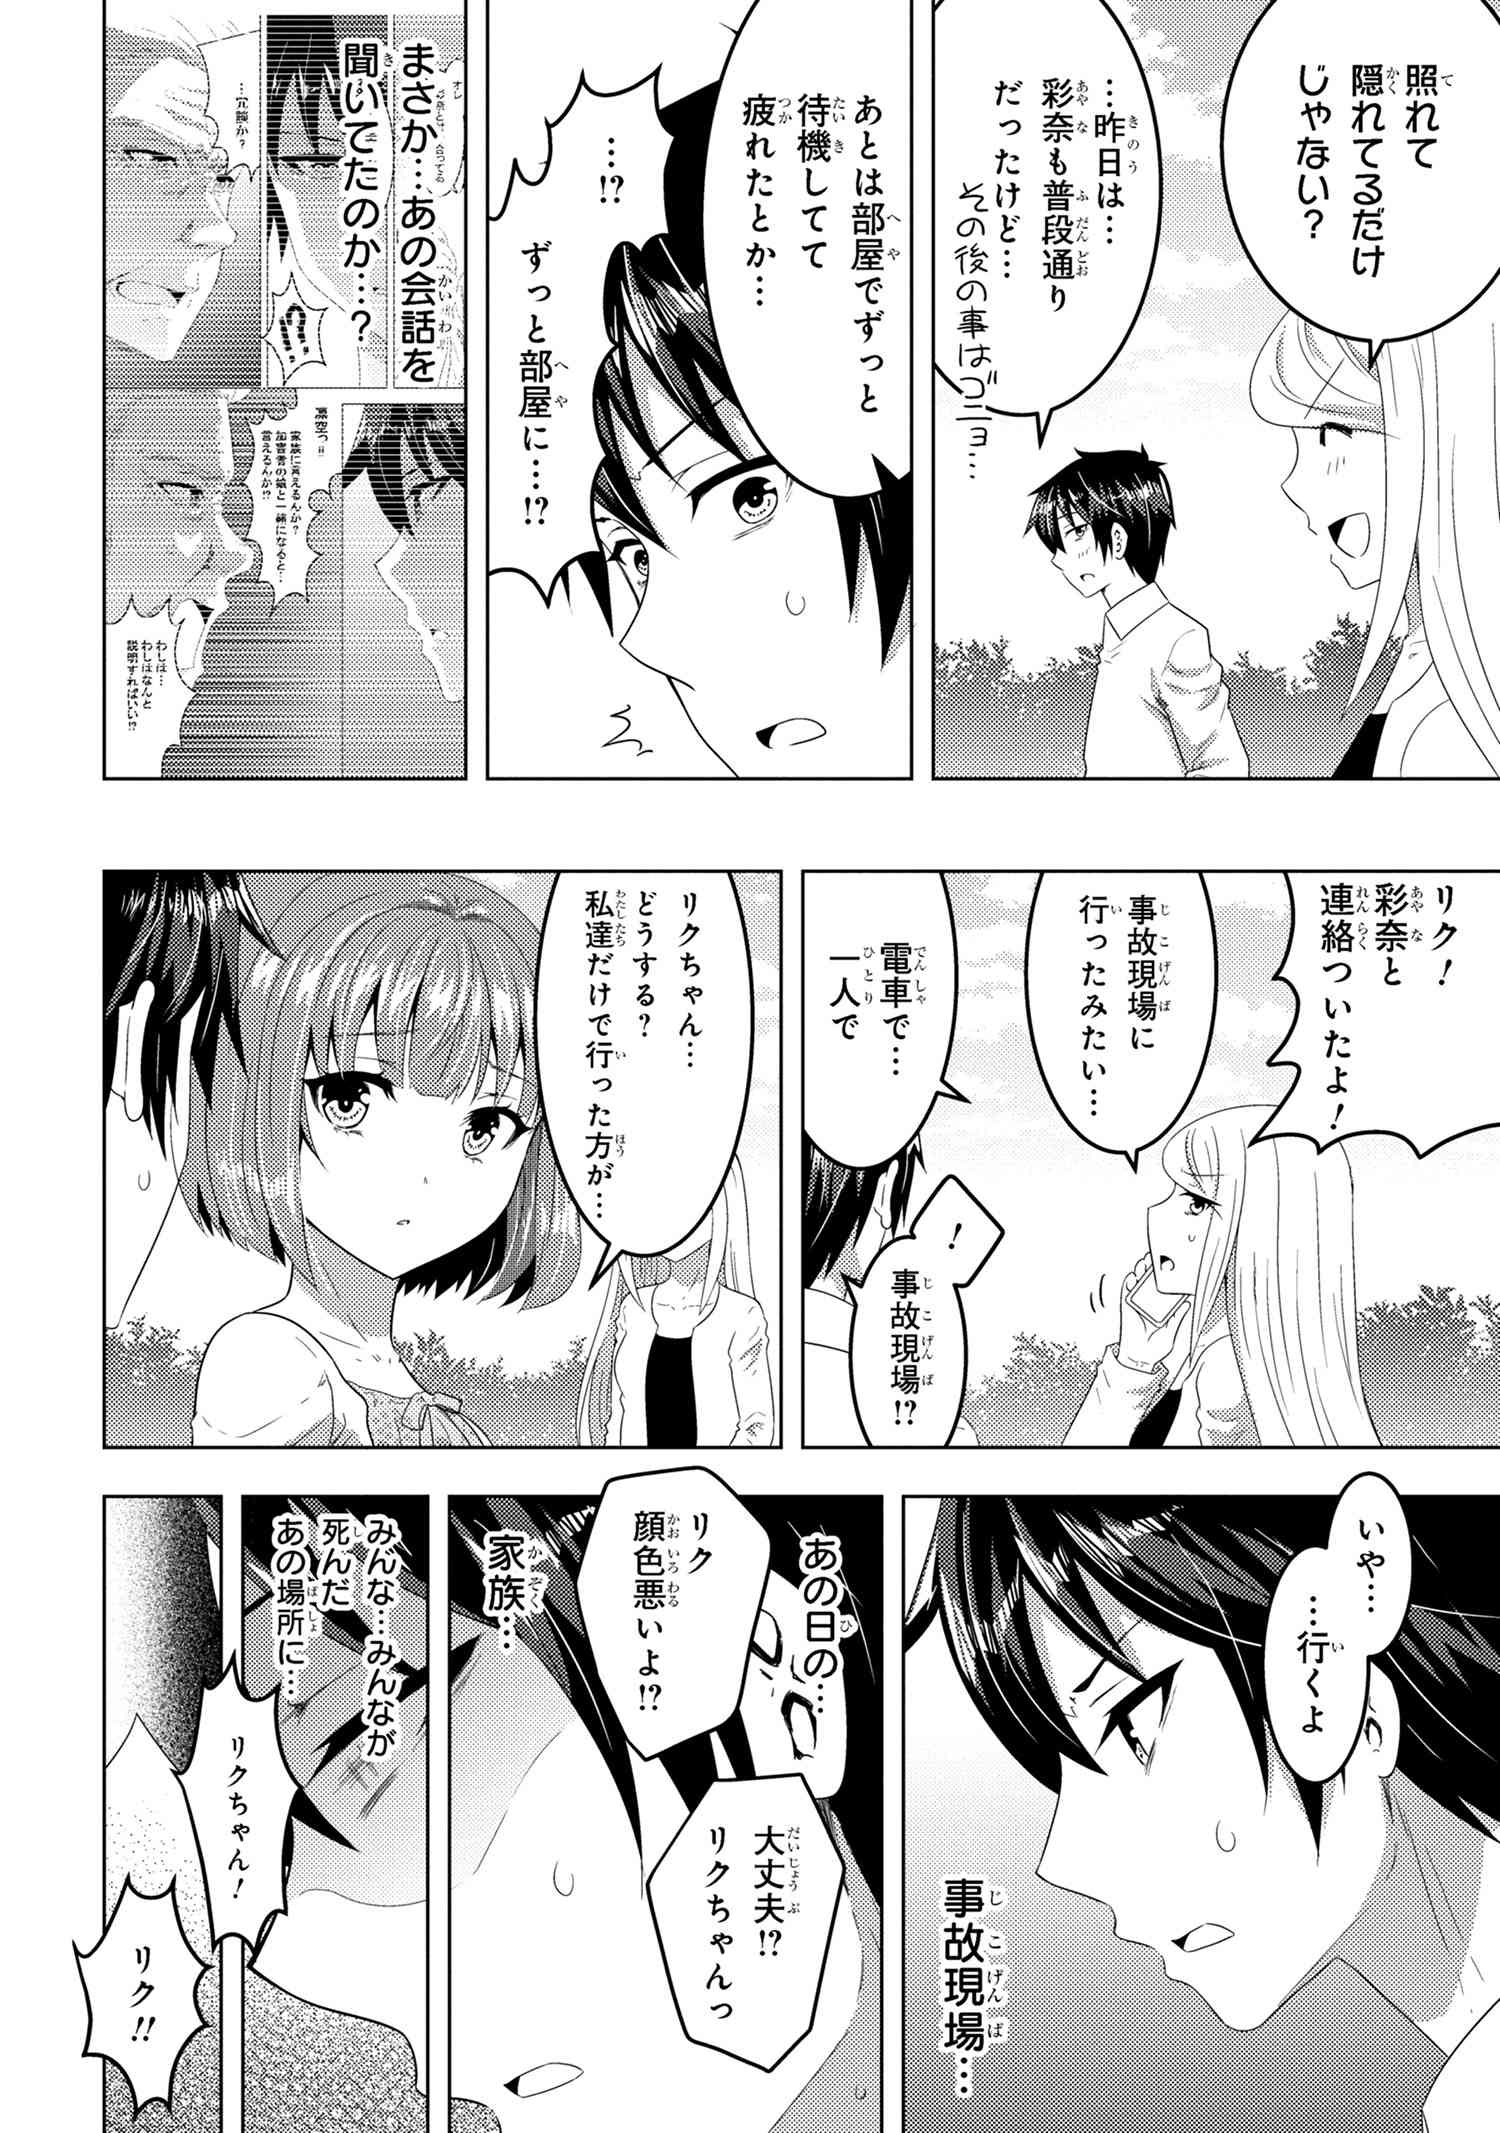 Konbini Goutou kara Tasuketa Jimi Tenin ga, Onaji Class no Ubu de Kawaii Gal datta - Chapter 14.2 - Page 15